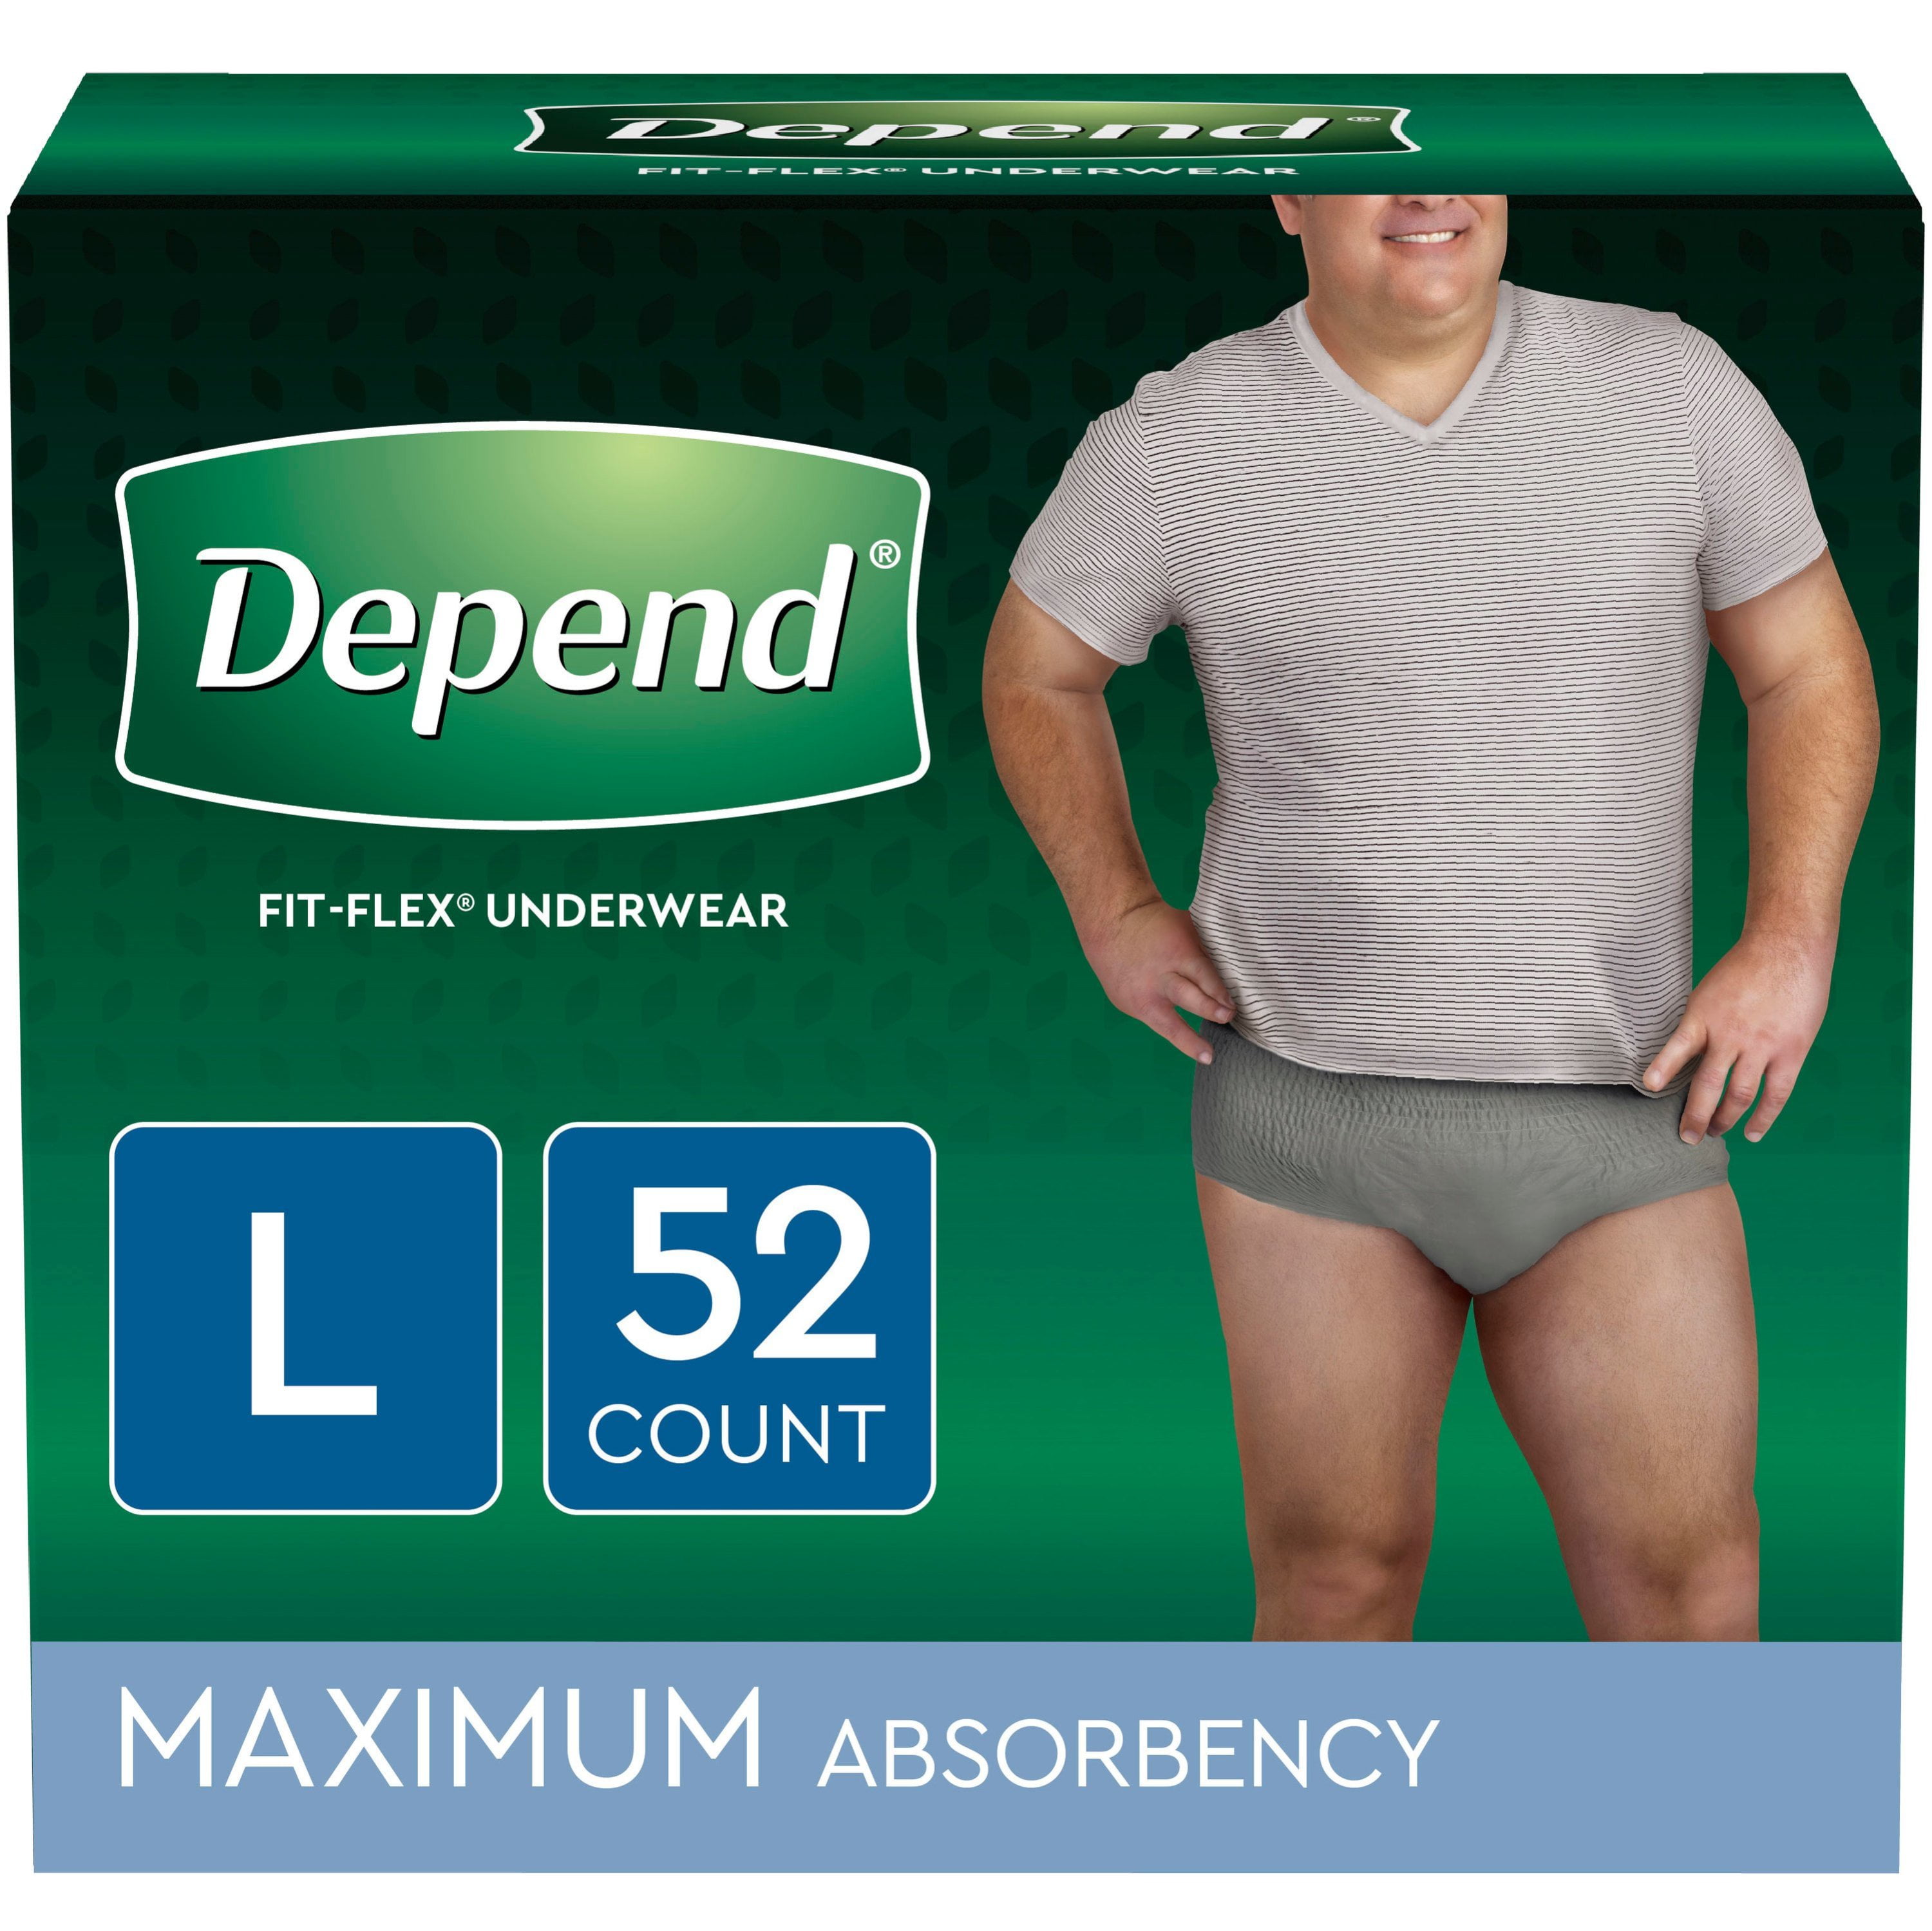 Depend Fit-Flex Incontinence Underwear for Men, Maximum Absorbency ...